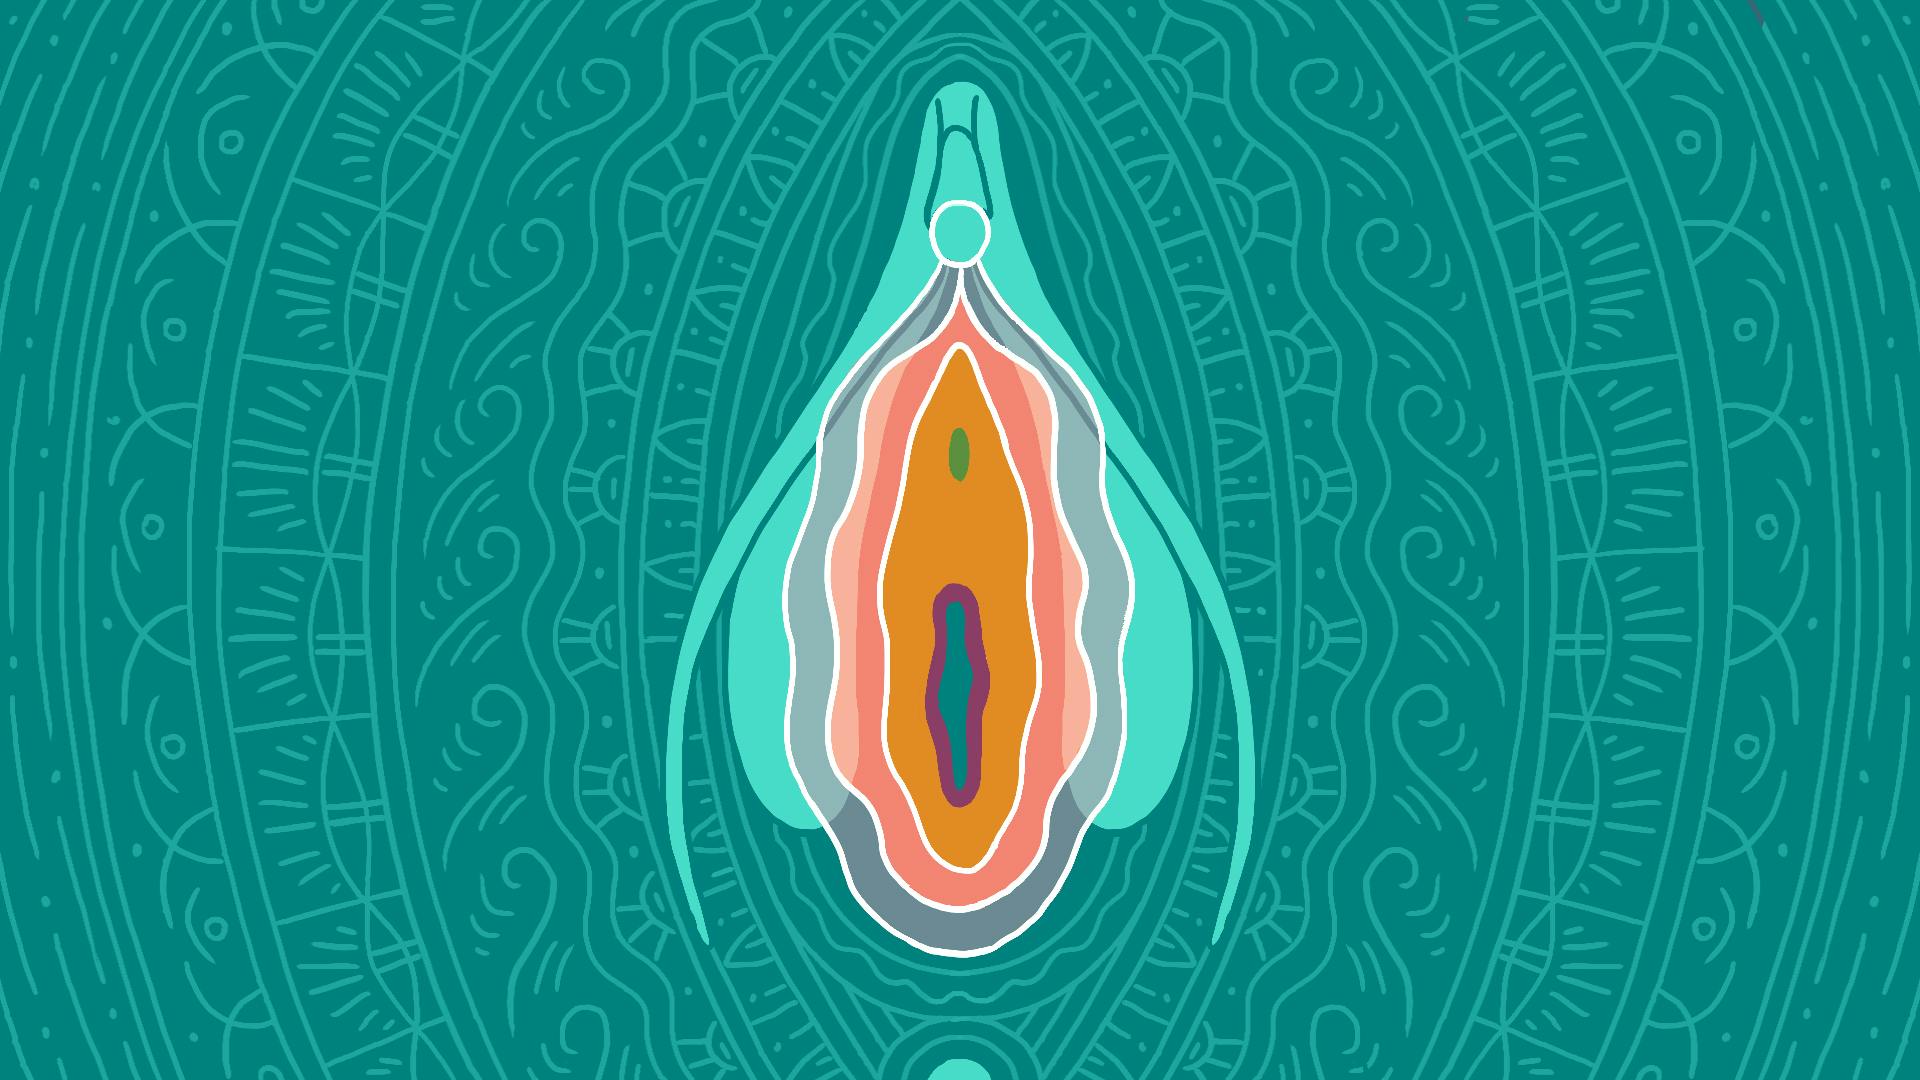 Illustration of the vulva, including the vagina, labia, and clitoris